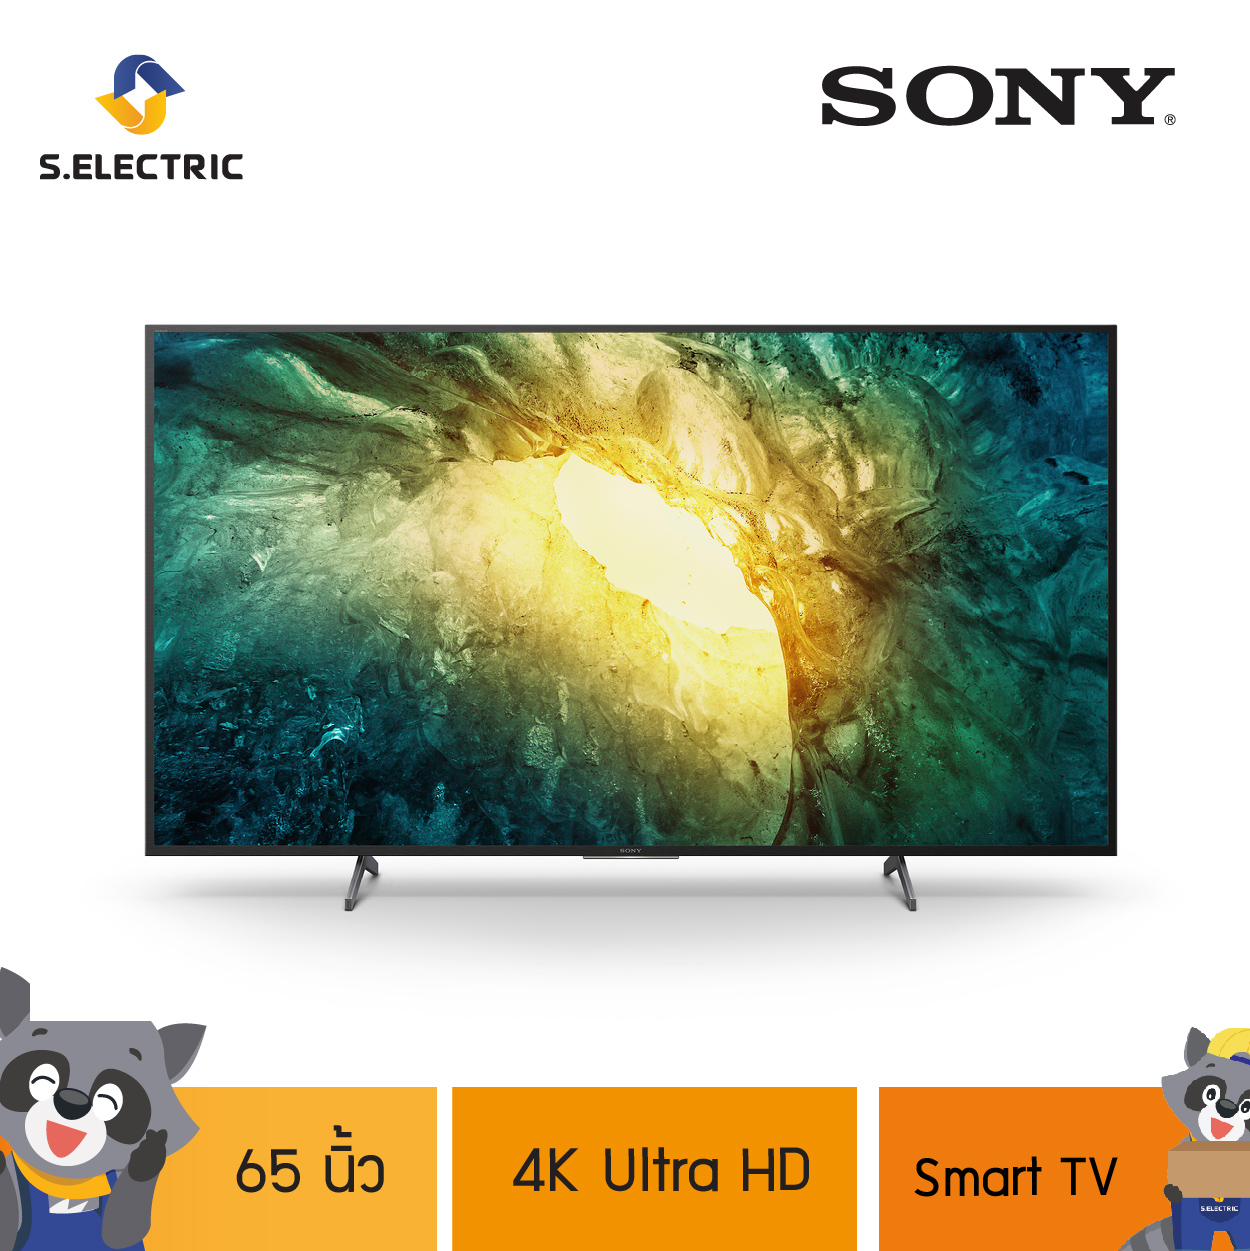 SONY TV 65นิ้ว 4K สมาร์ททีวี Android TV รุ่น KD-65X7500H Ultra HD  High Dynamic Range (HDR)  Smart TV